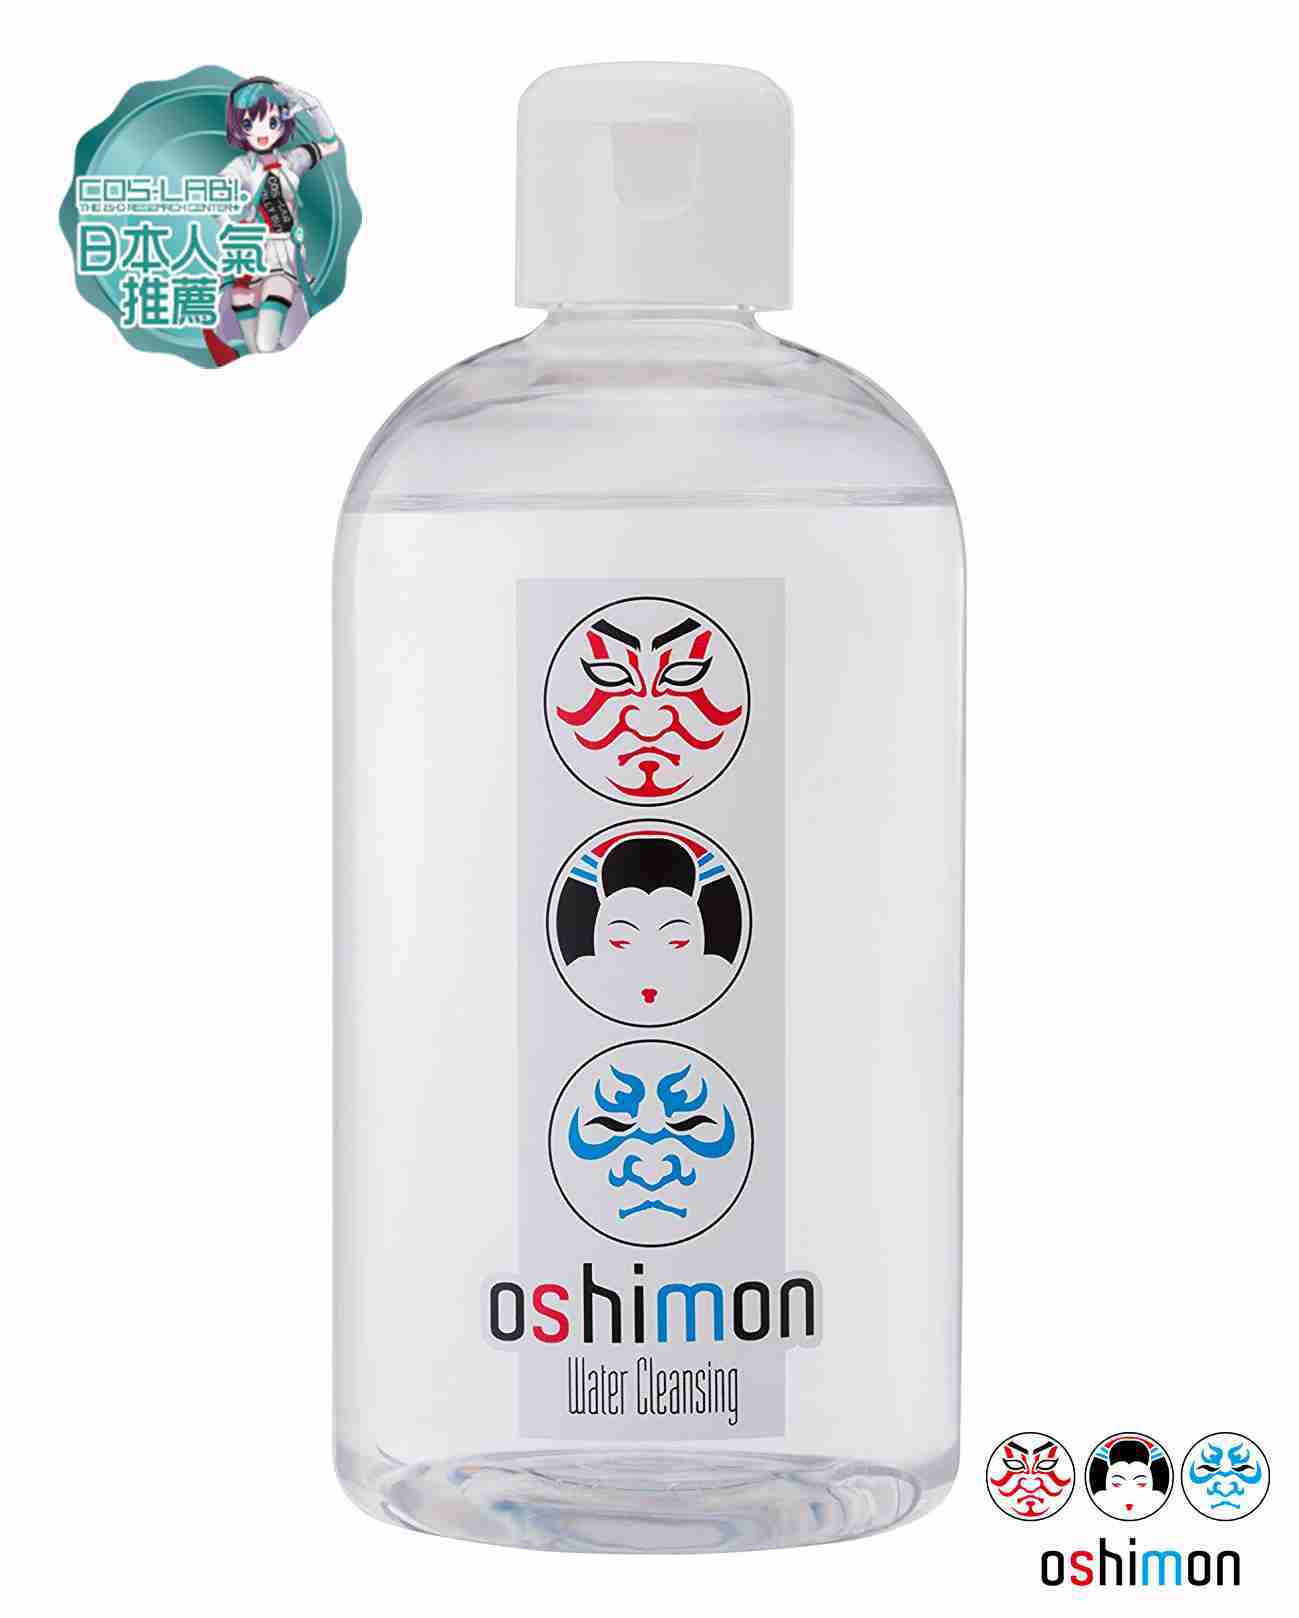 【OSHIMON】 水クレンジング 卸妝水